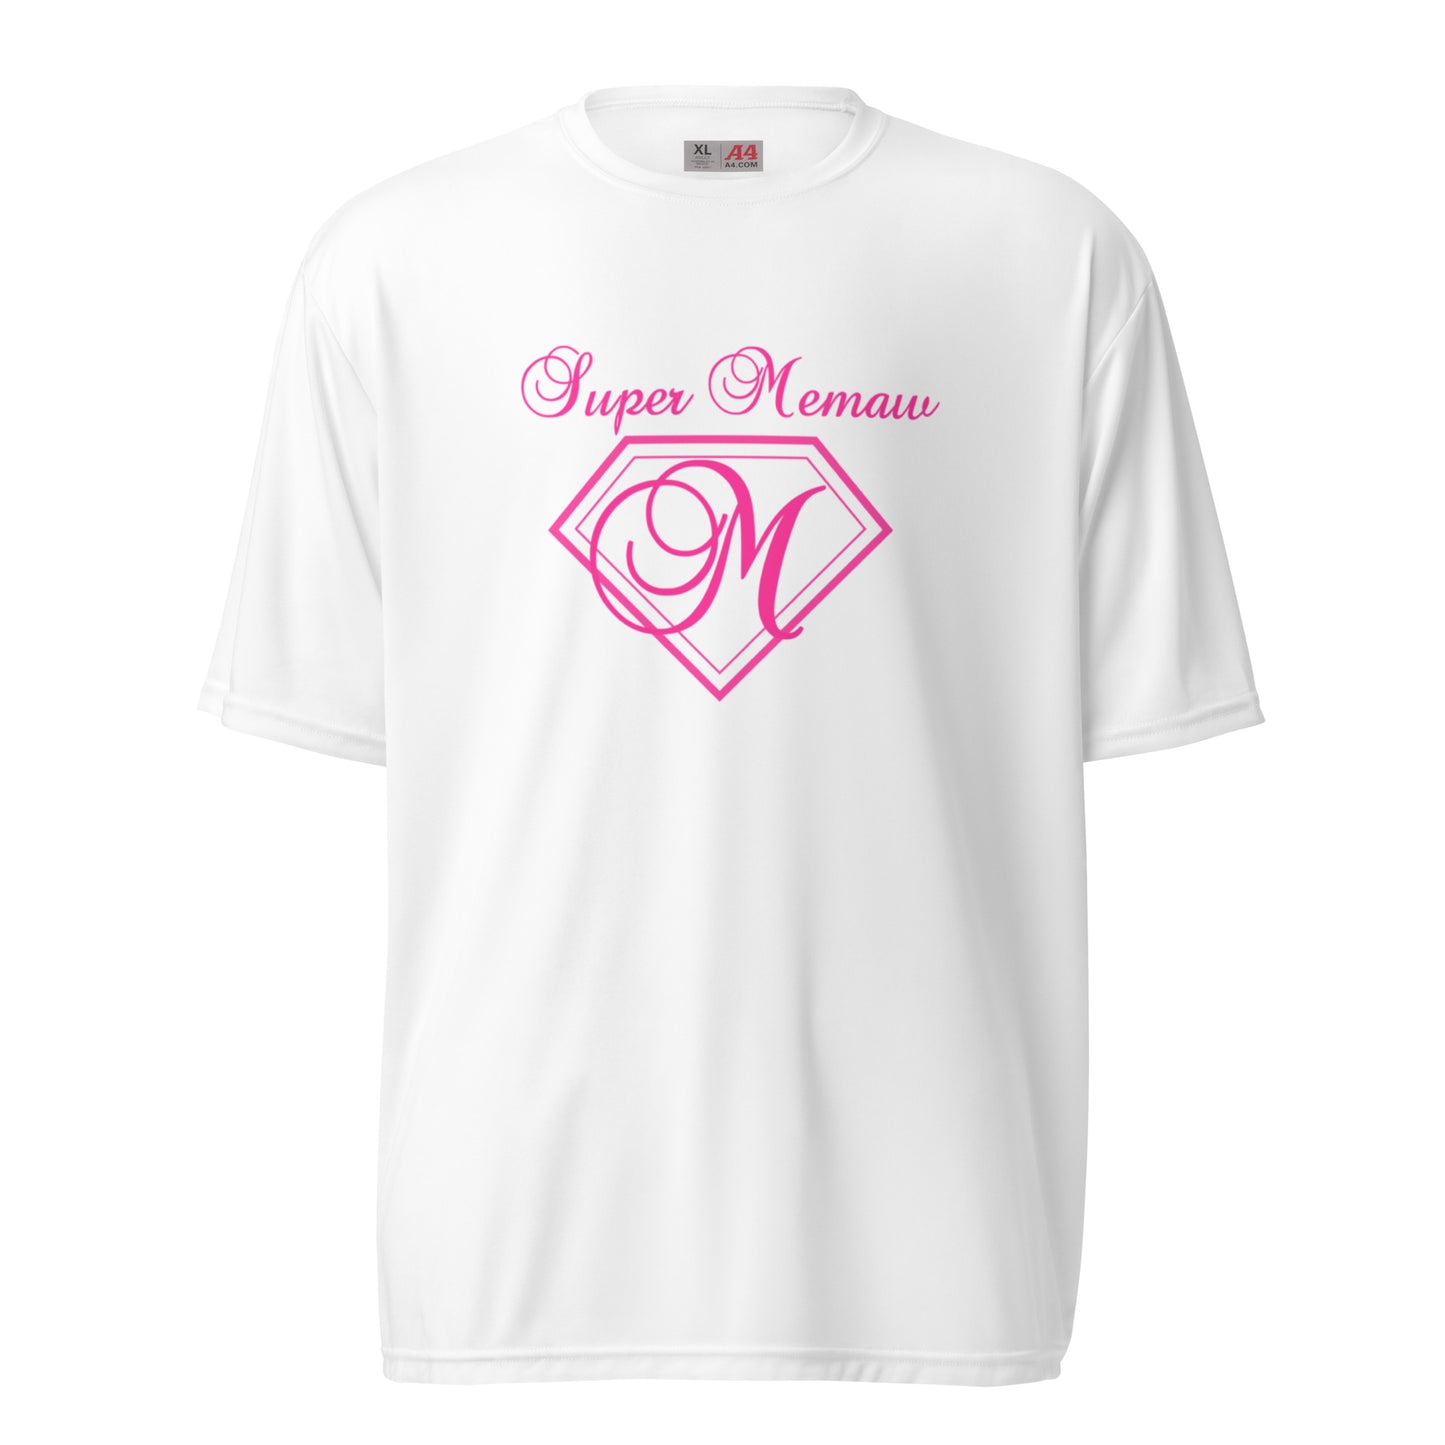 Super Memaw unisex performance crew neck t-shirt - Pink Print